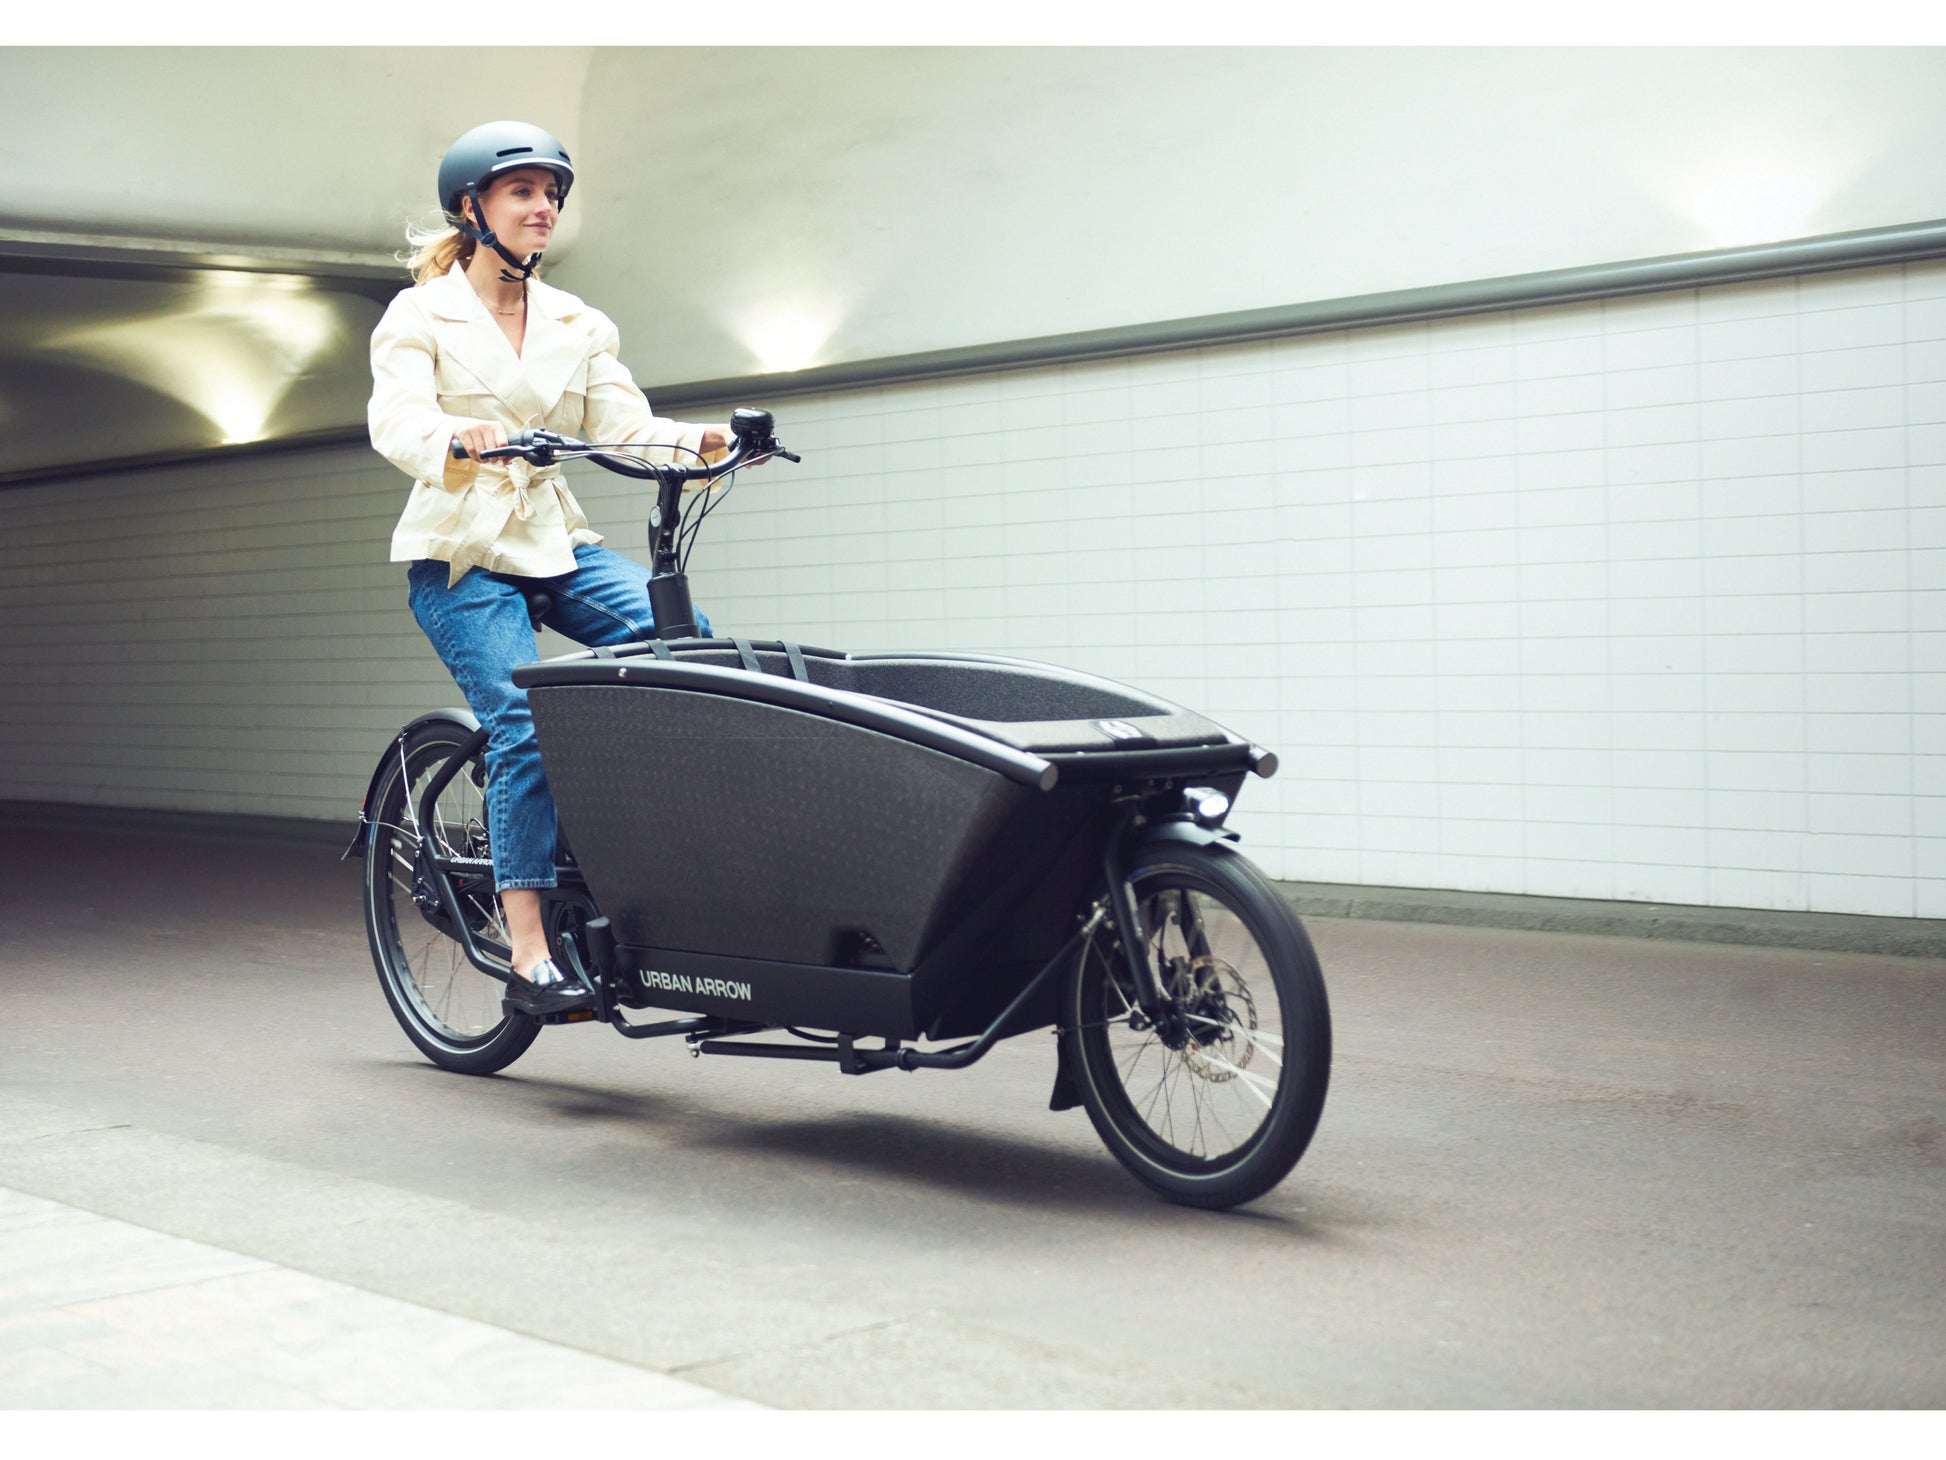 Urban Arrow Family Performance cargo electric bike lady commuting in city